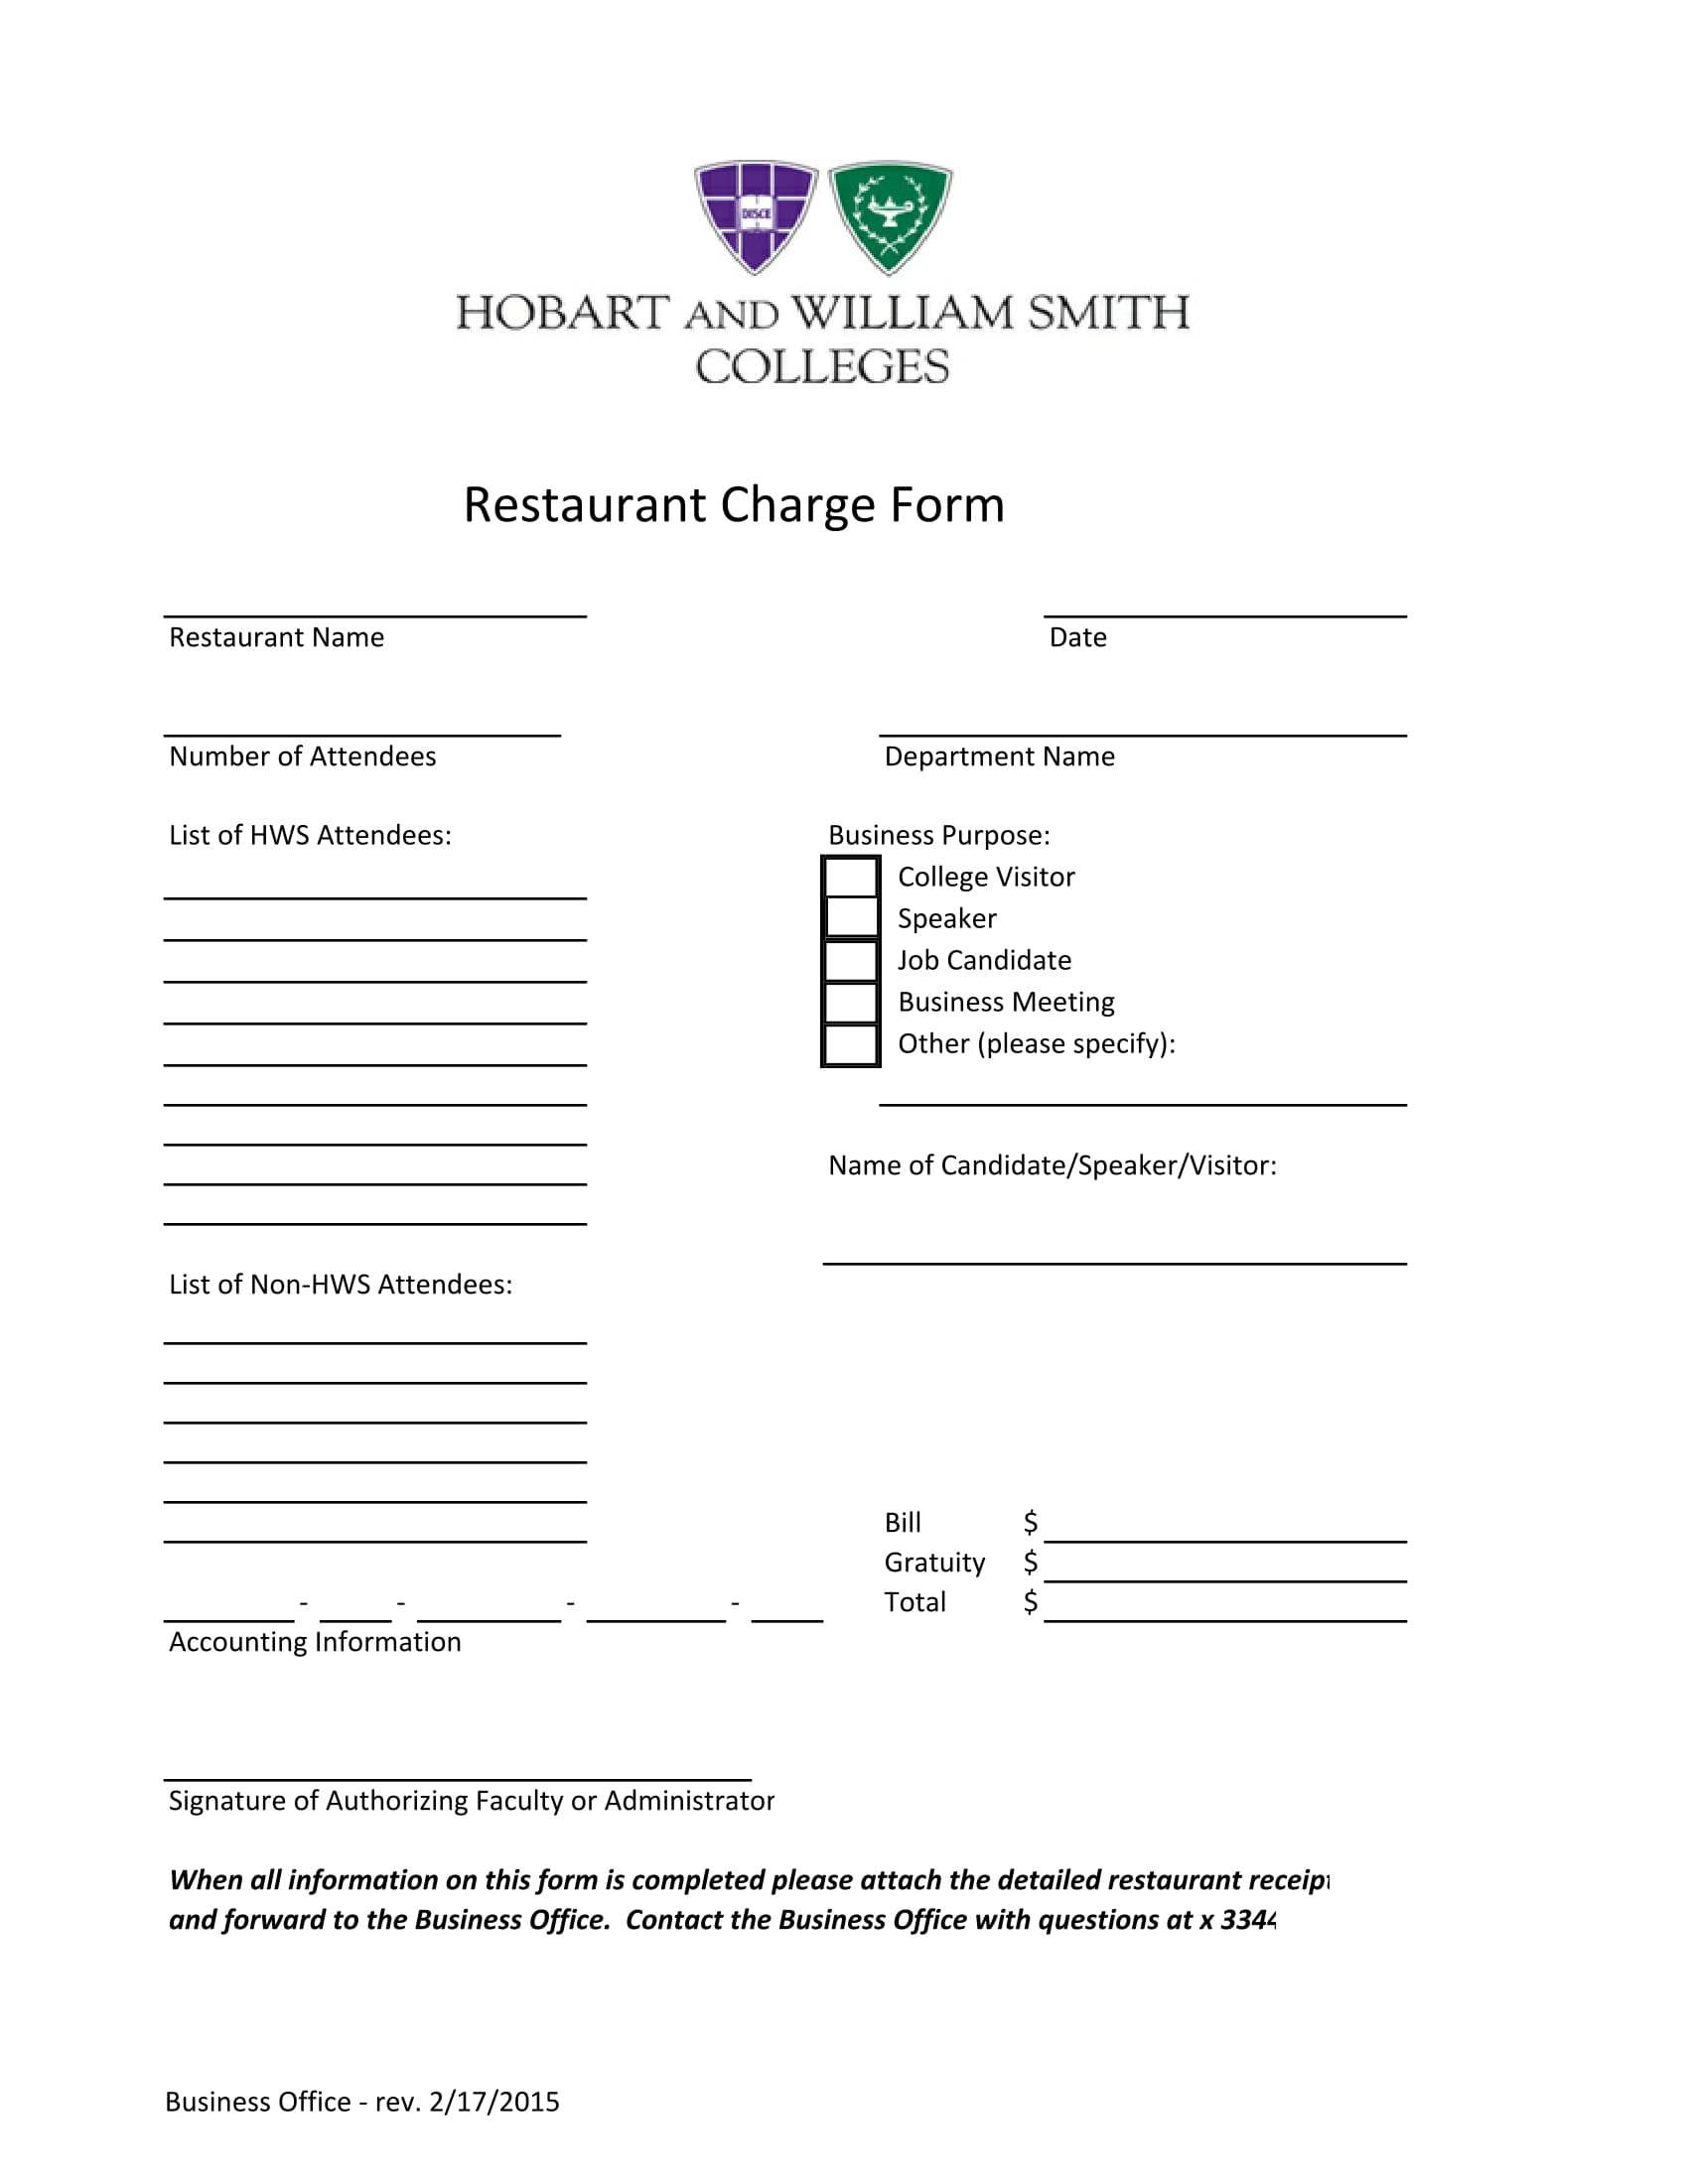 restaurant charge form sample 1